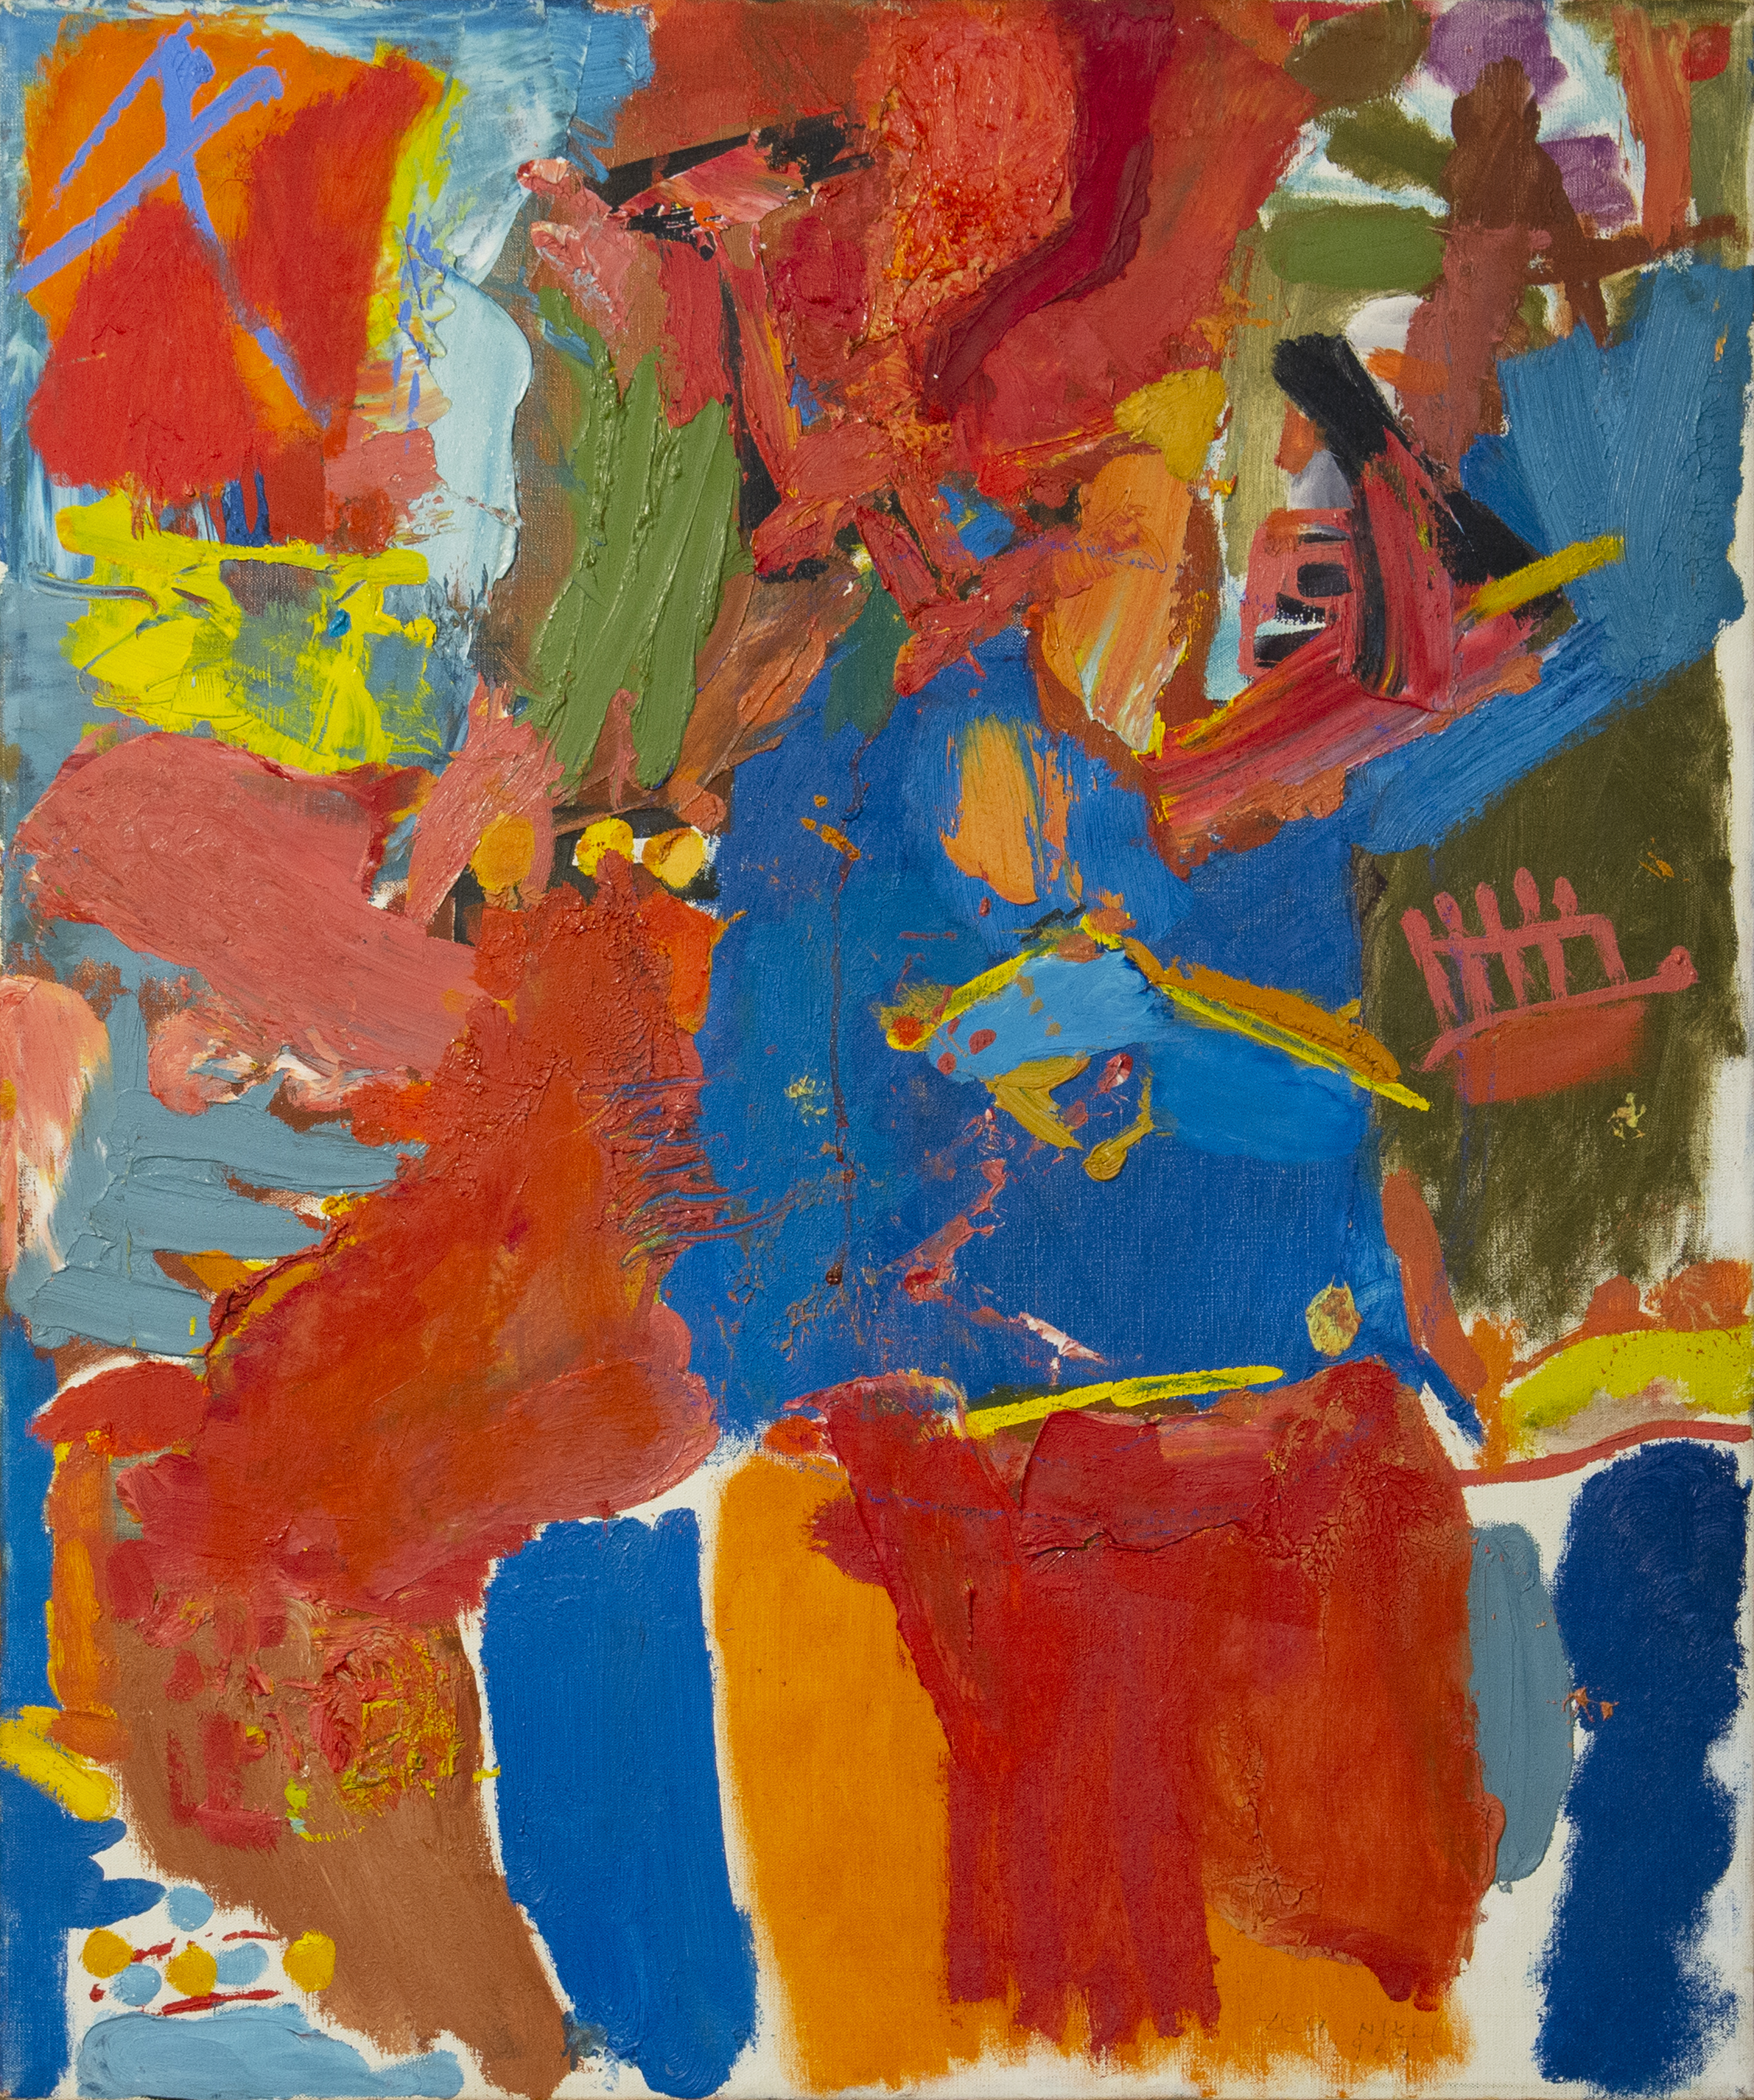 Lea Nikel, Untitled, 1967, oil on canvas, 56x66 cm